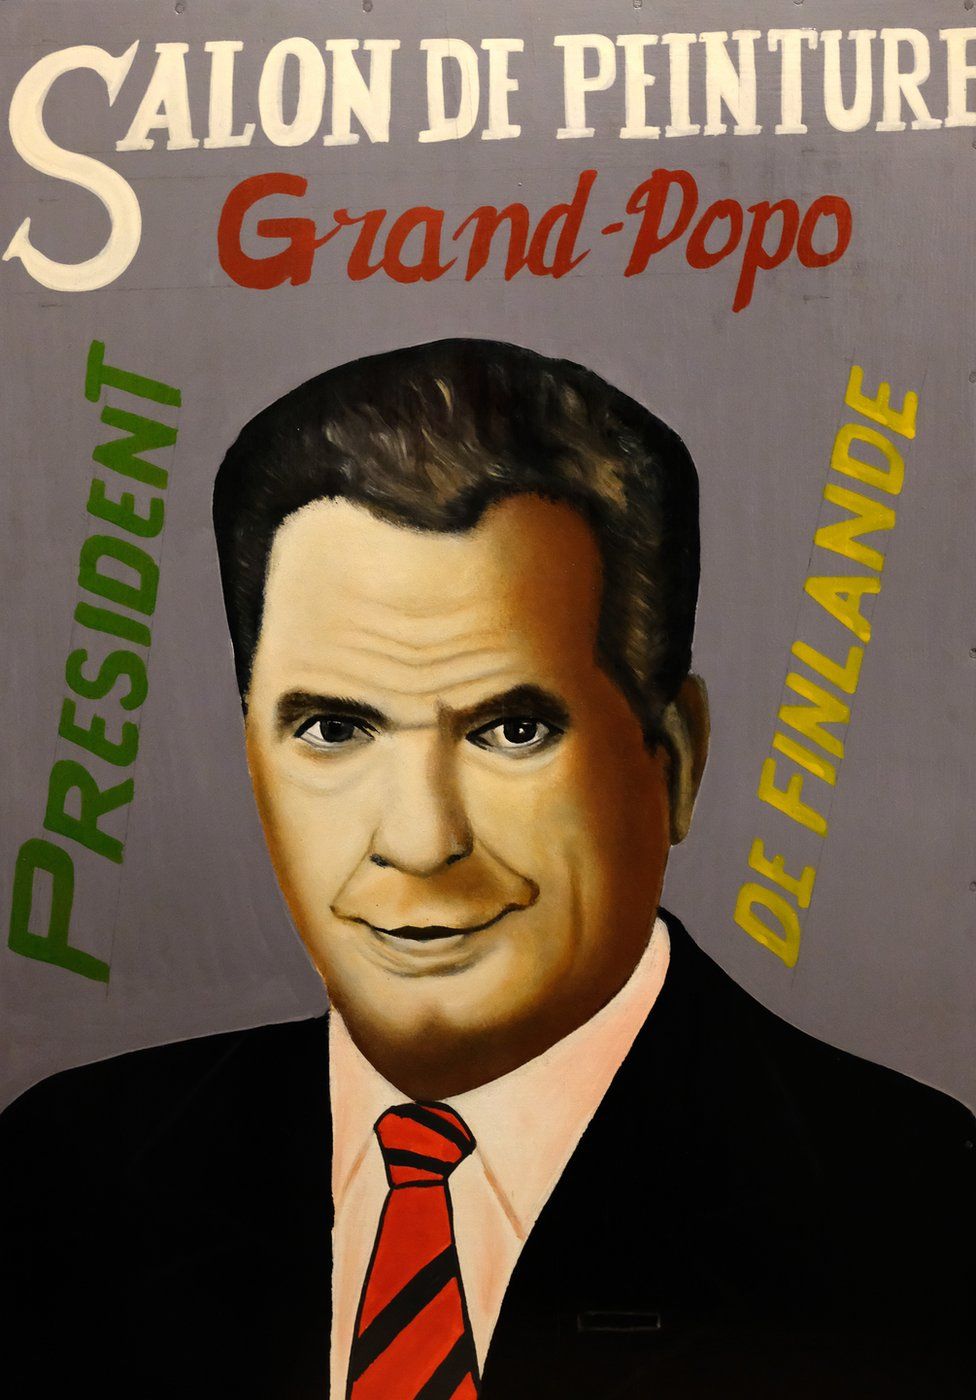 Painted portrait of Finnish President Sauli Niinisto